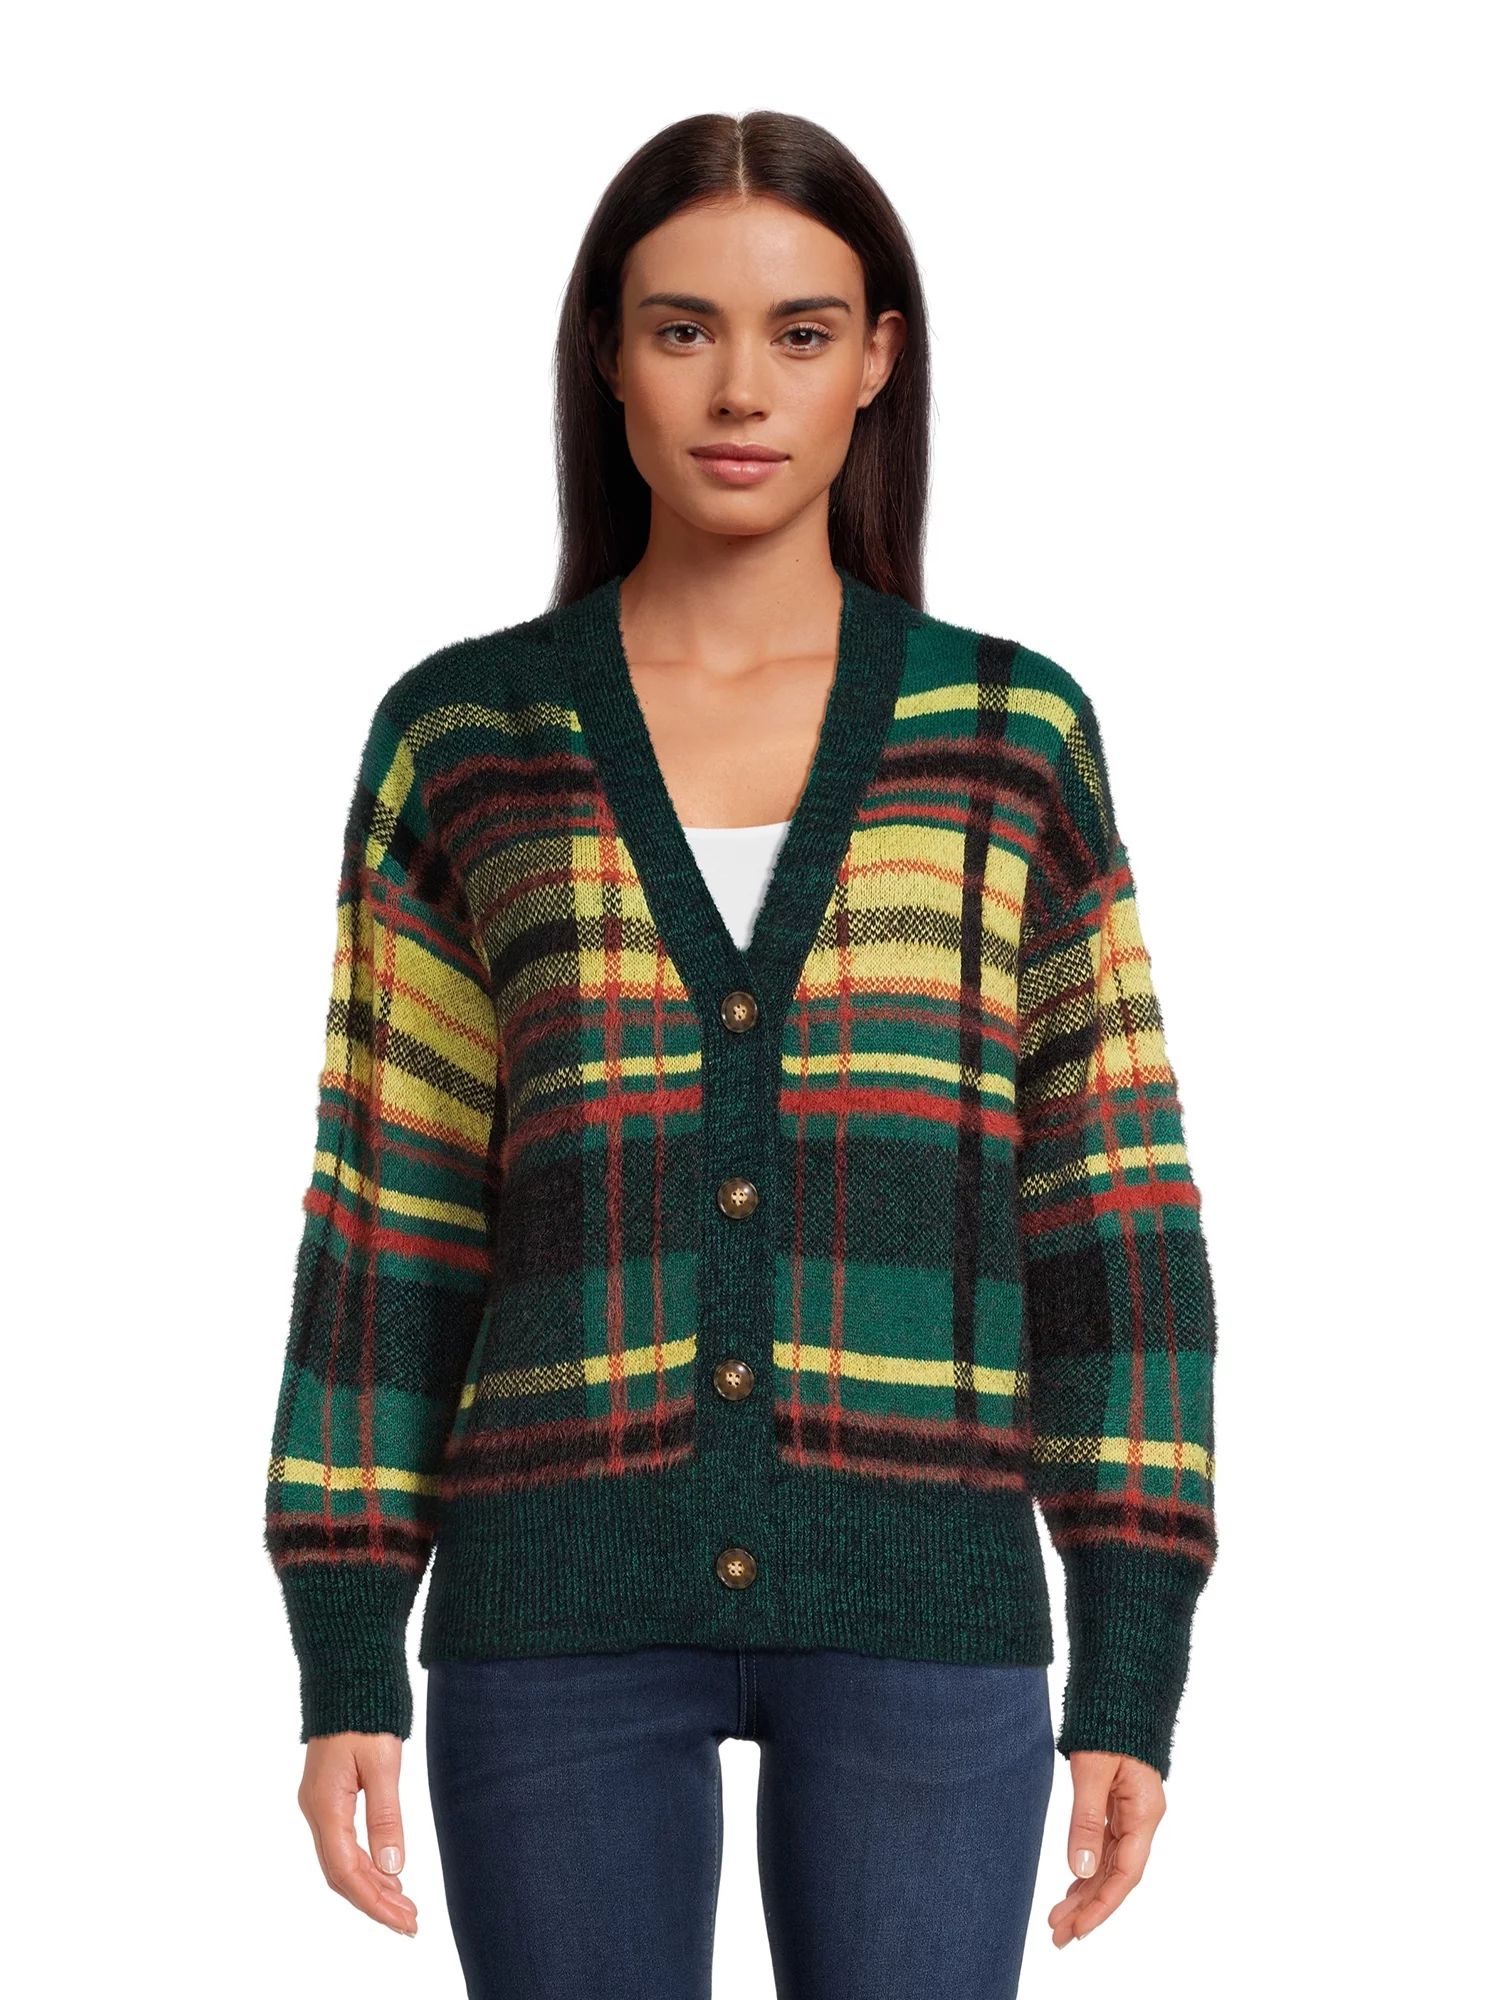 99 Jane Street Women's V-Neck Cardigan Sweater with Long Sleeves, Midweight, Sizes S-XXXL | Walmart (US)